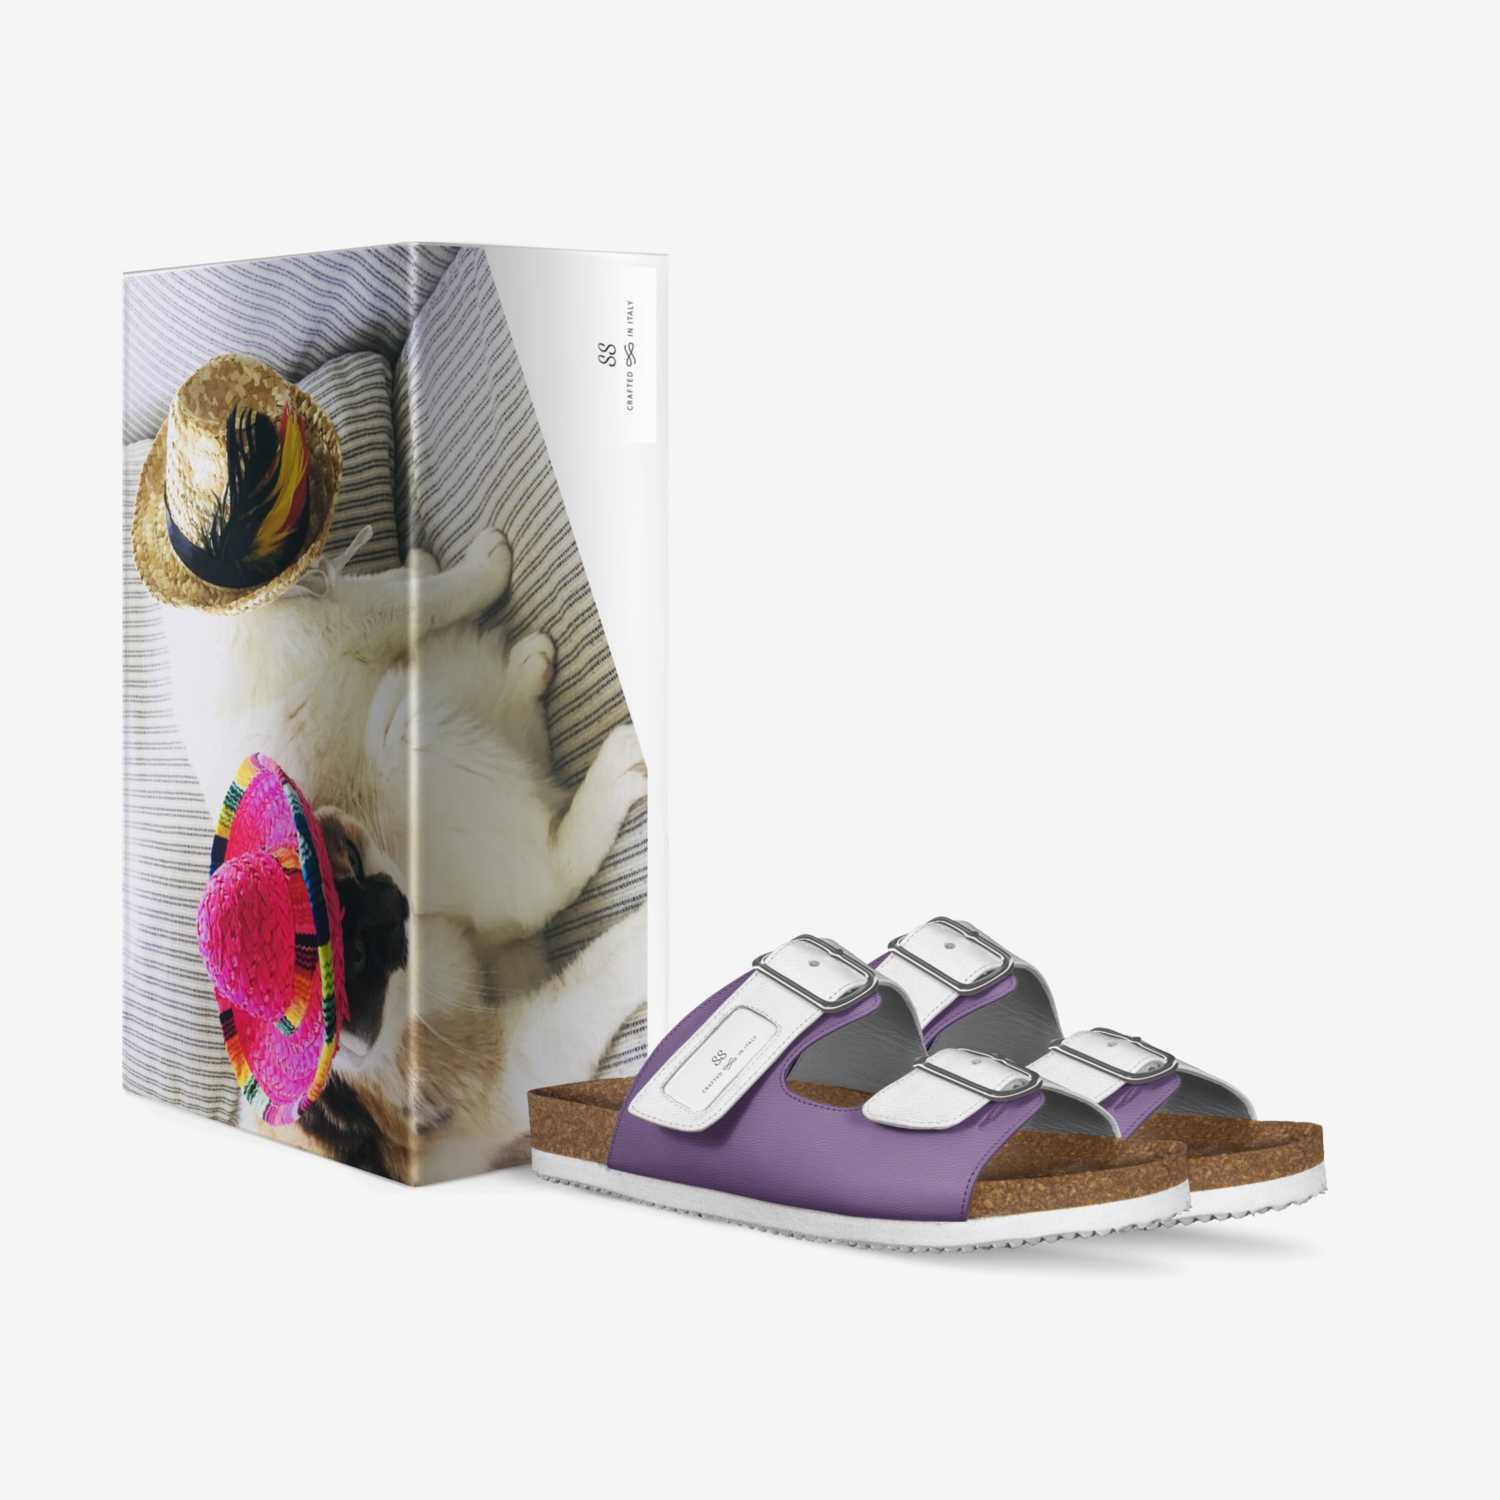 SS custom made in Italy shoes by Scarlett Kajala | Box view